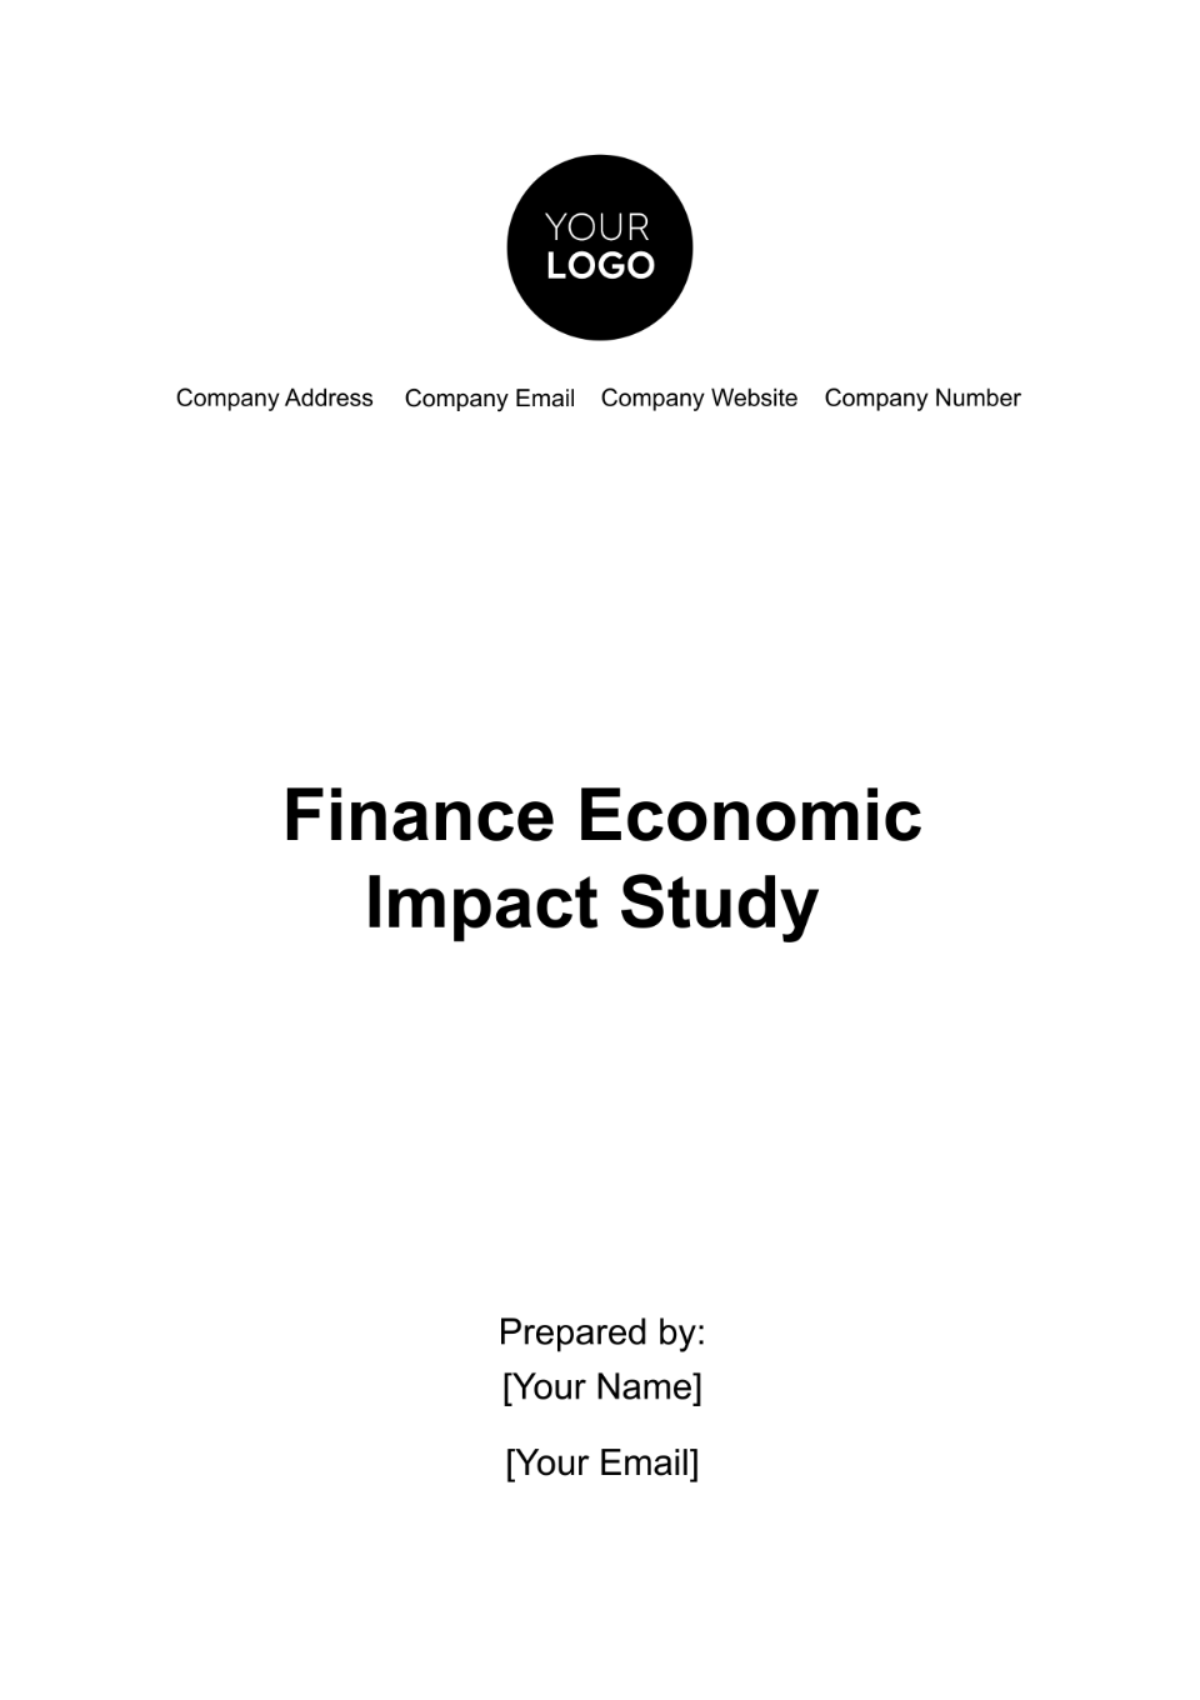 Finance Economic Impact Study Template